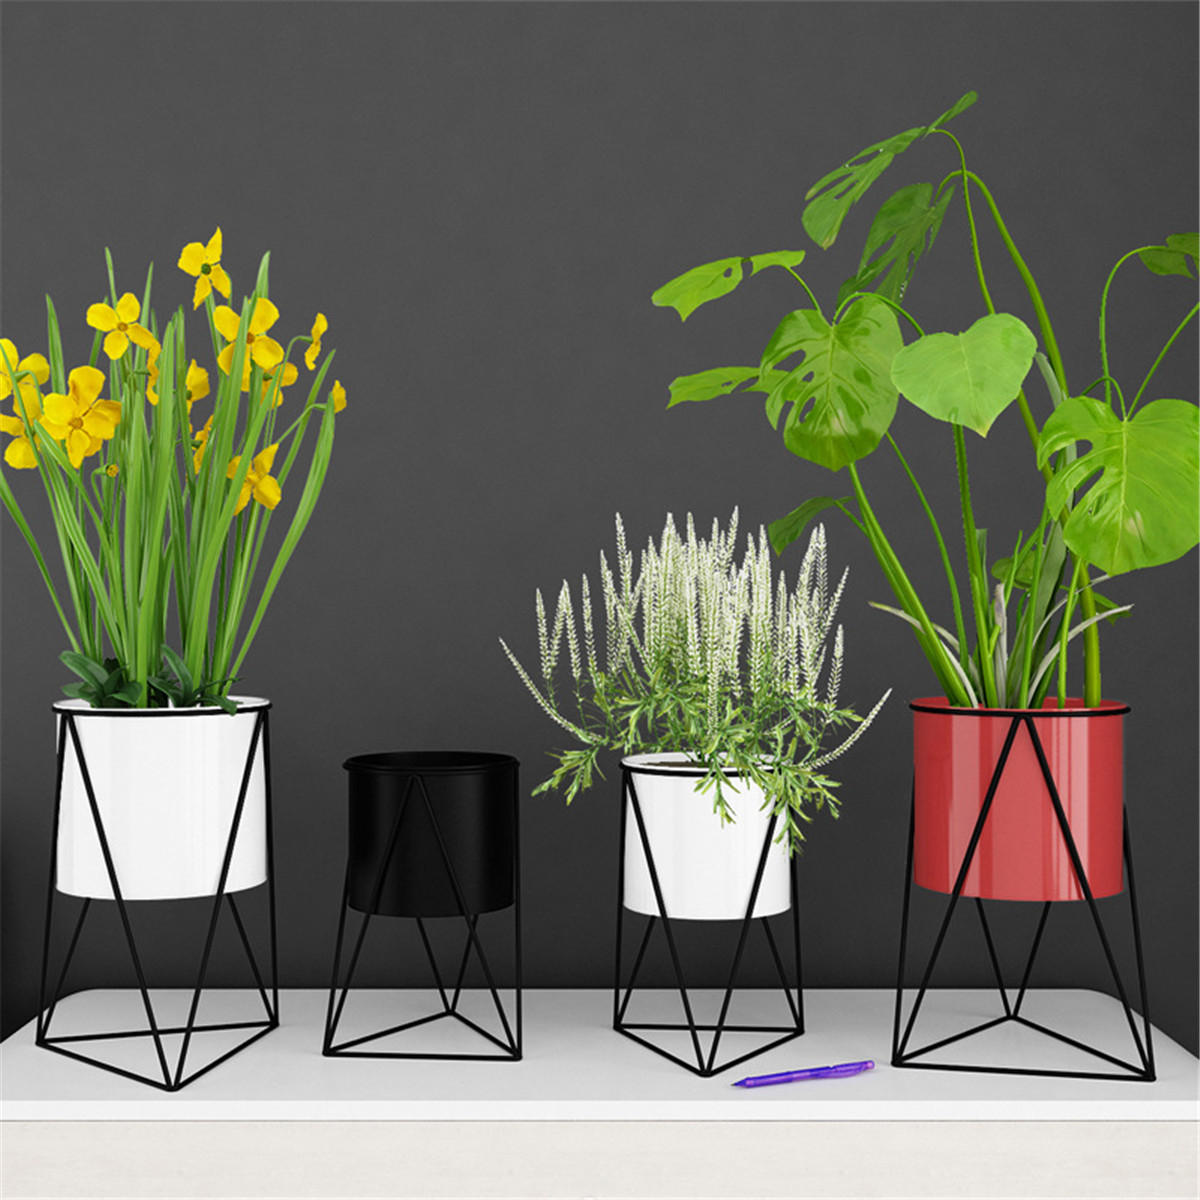 Geometric Metal Flower Pot Stand Chic Indoor Garden Plant Holder Display Planter